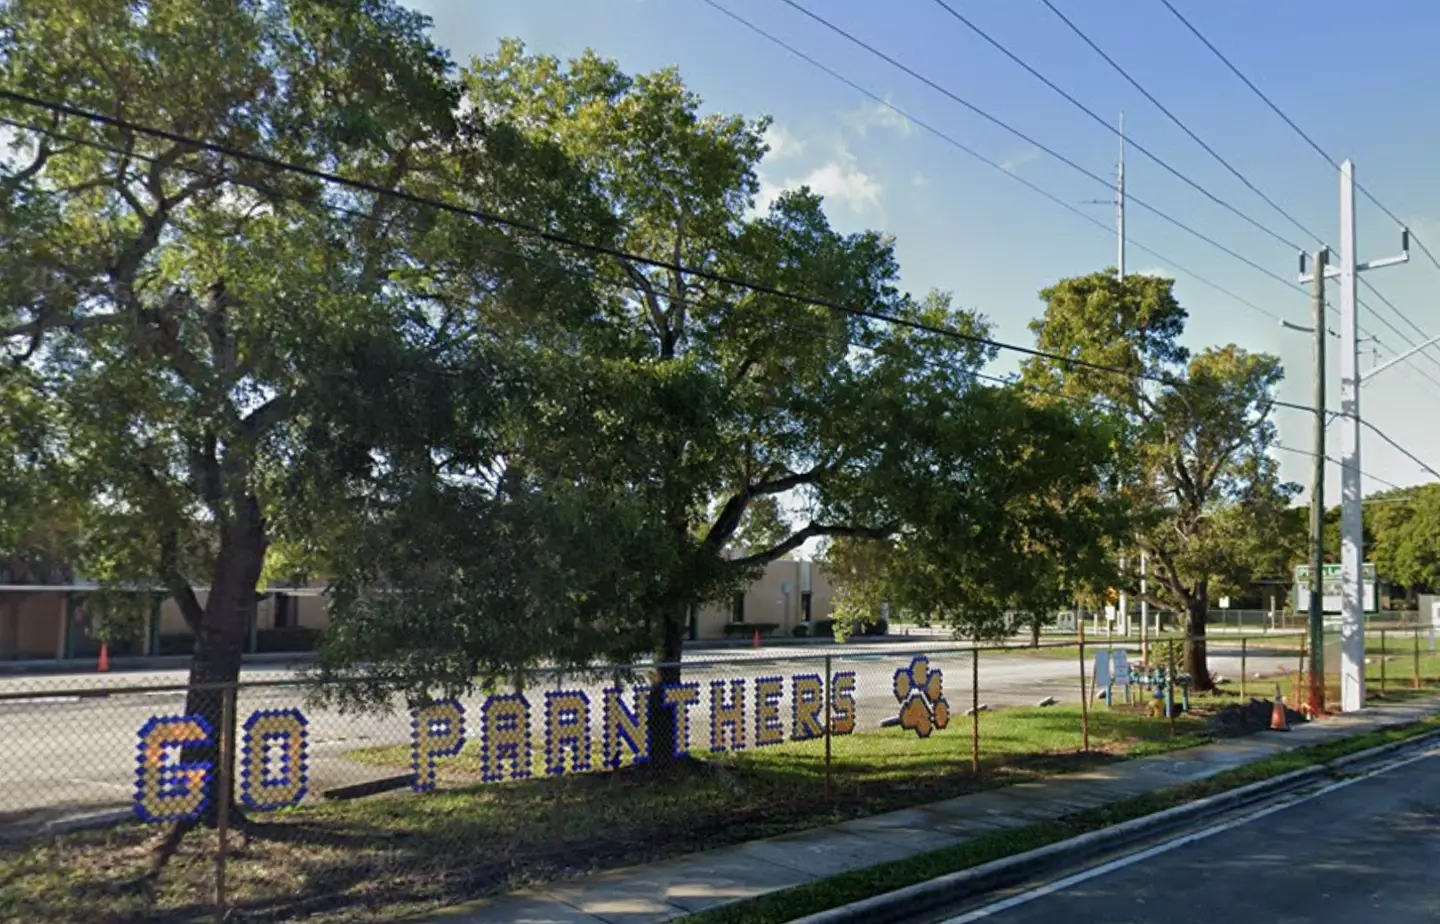 Pine Lakes Elementary School (Google Maps)